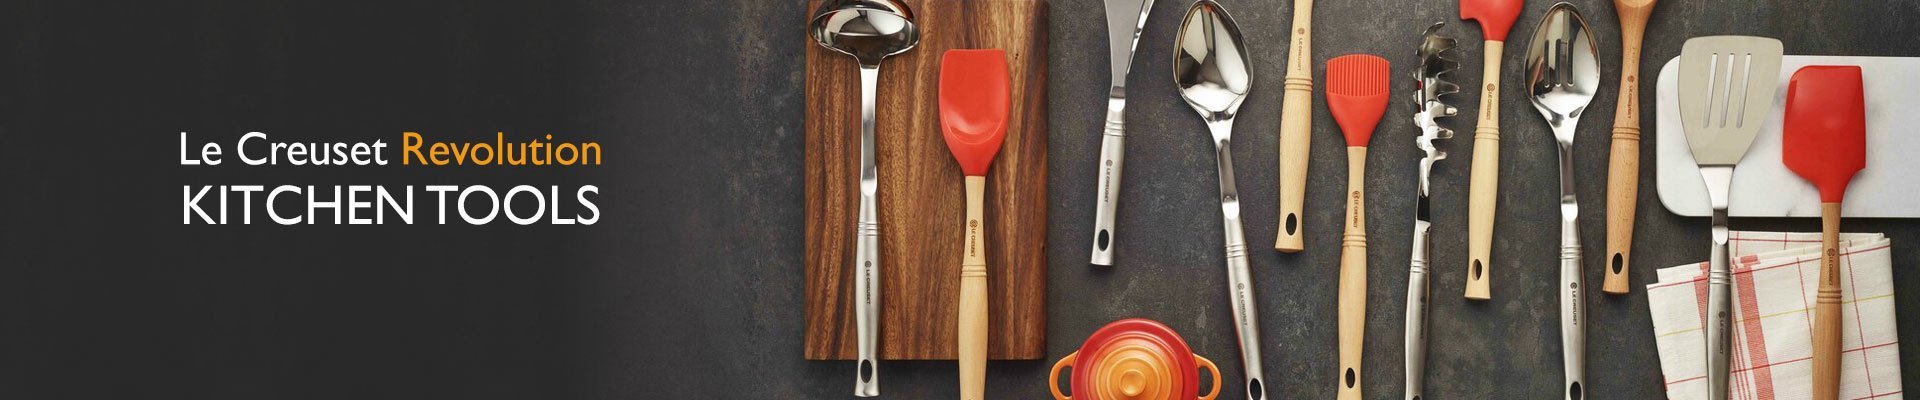 Le Creuset Revolution Kitchen Tools | Kitchen Smart